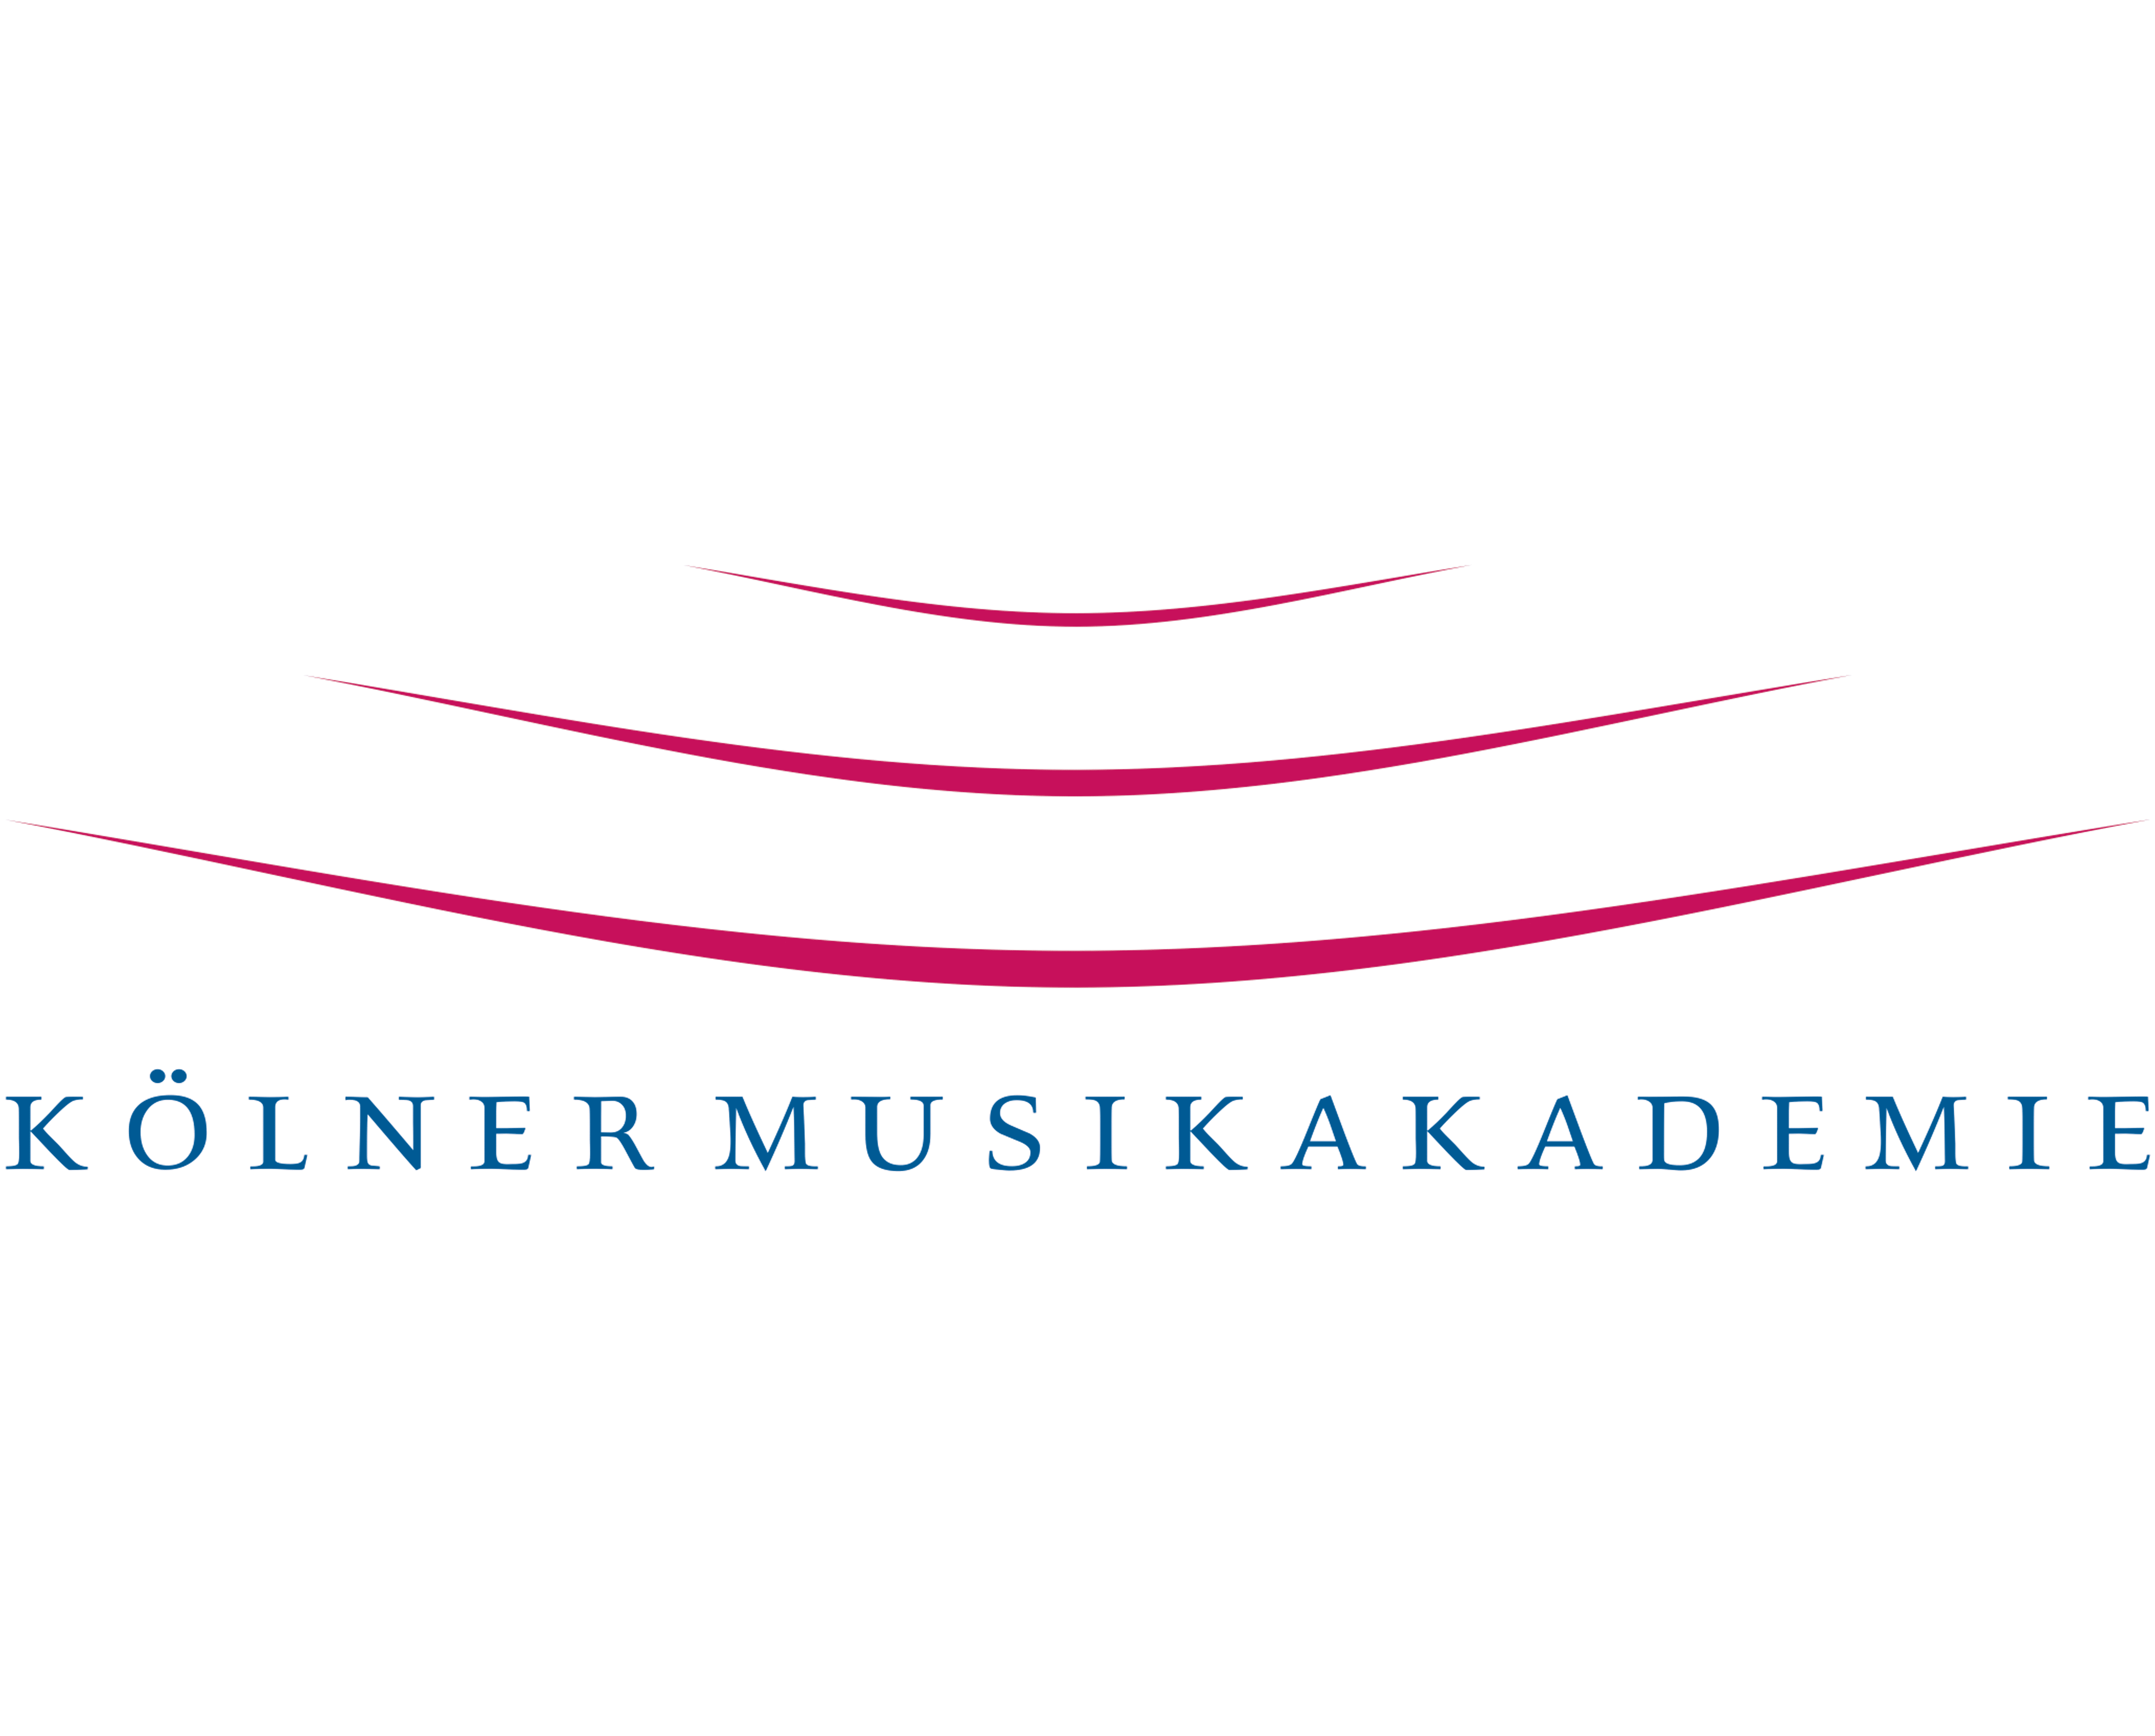 Kölner Musikakademie